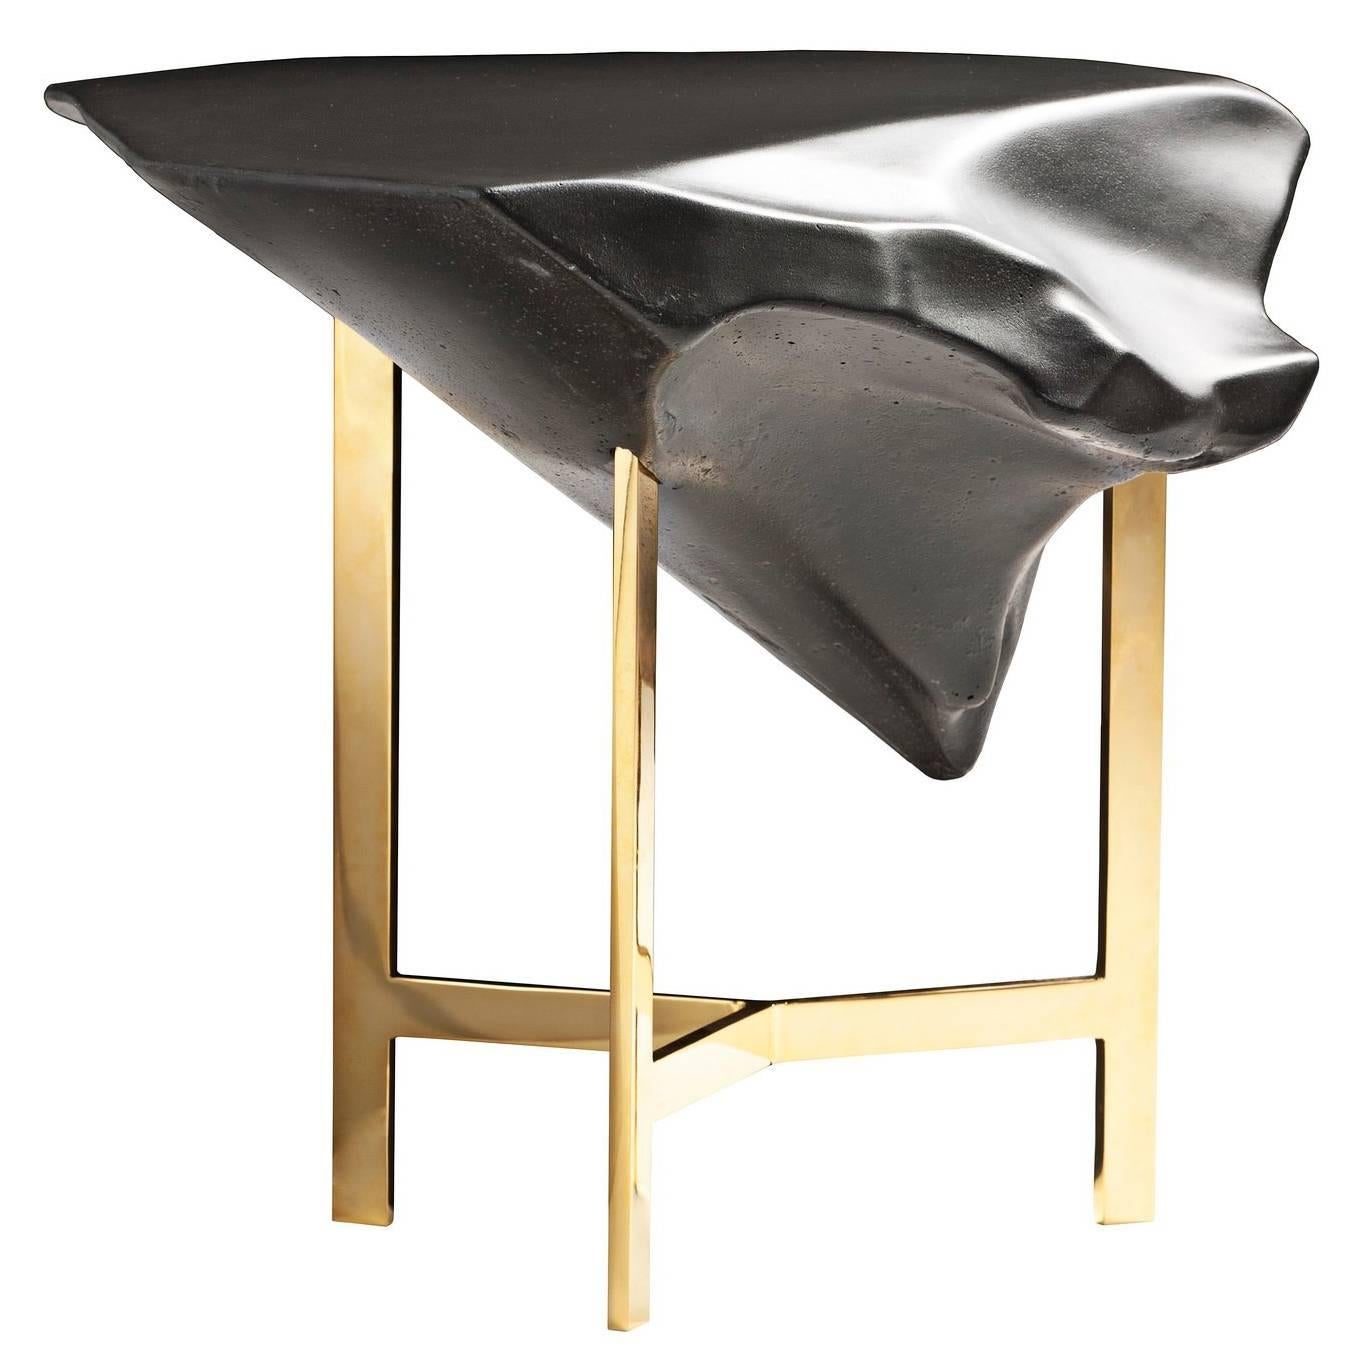 "Basalt" Glossy Concrete Top Coffee Table by Fredrikson Stallard for Driade